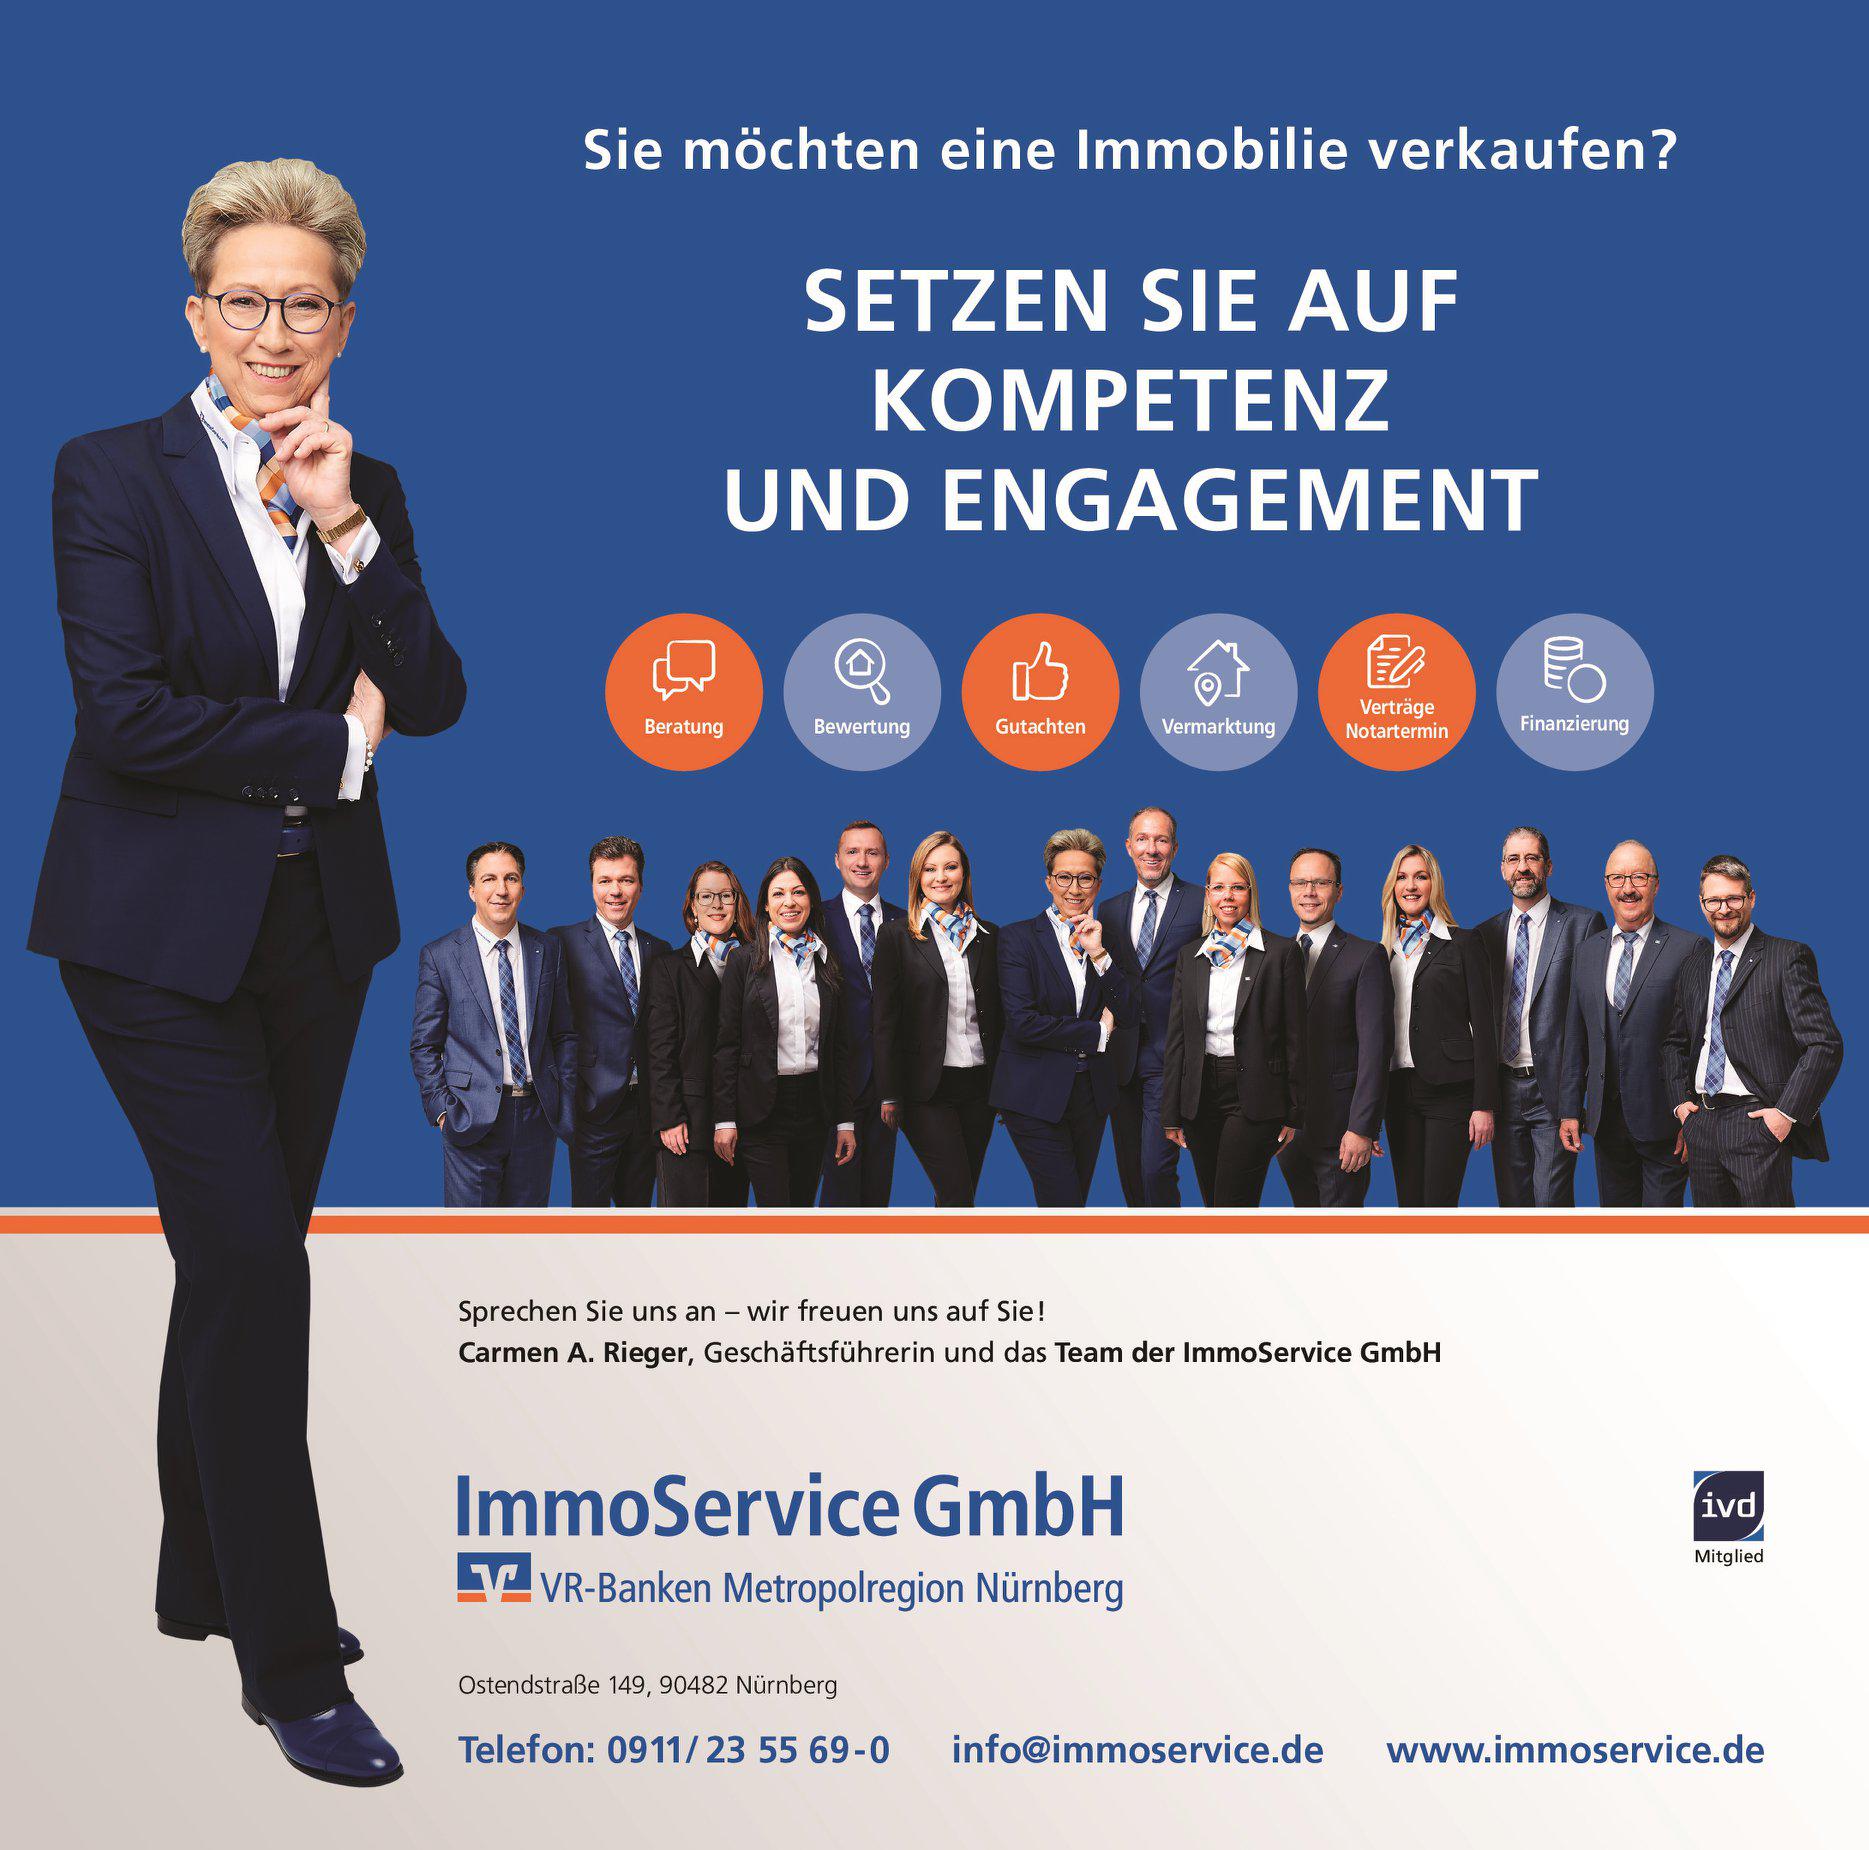 Fotos - Immo Service GmbH VR-Banken Metropolregion Nbg. - 3